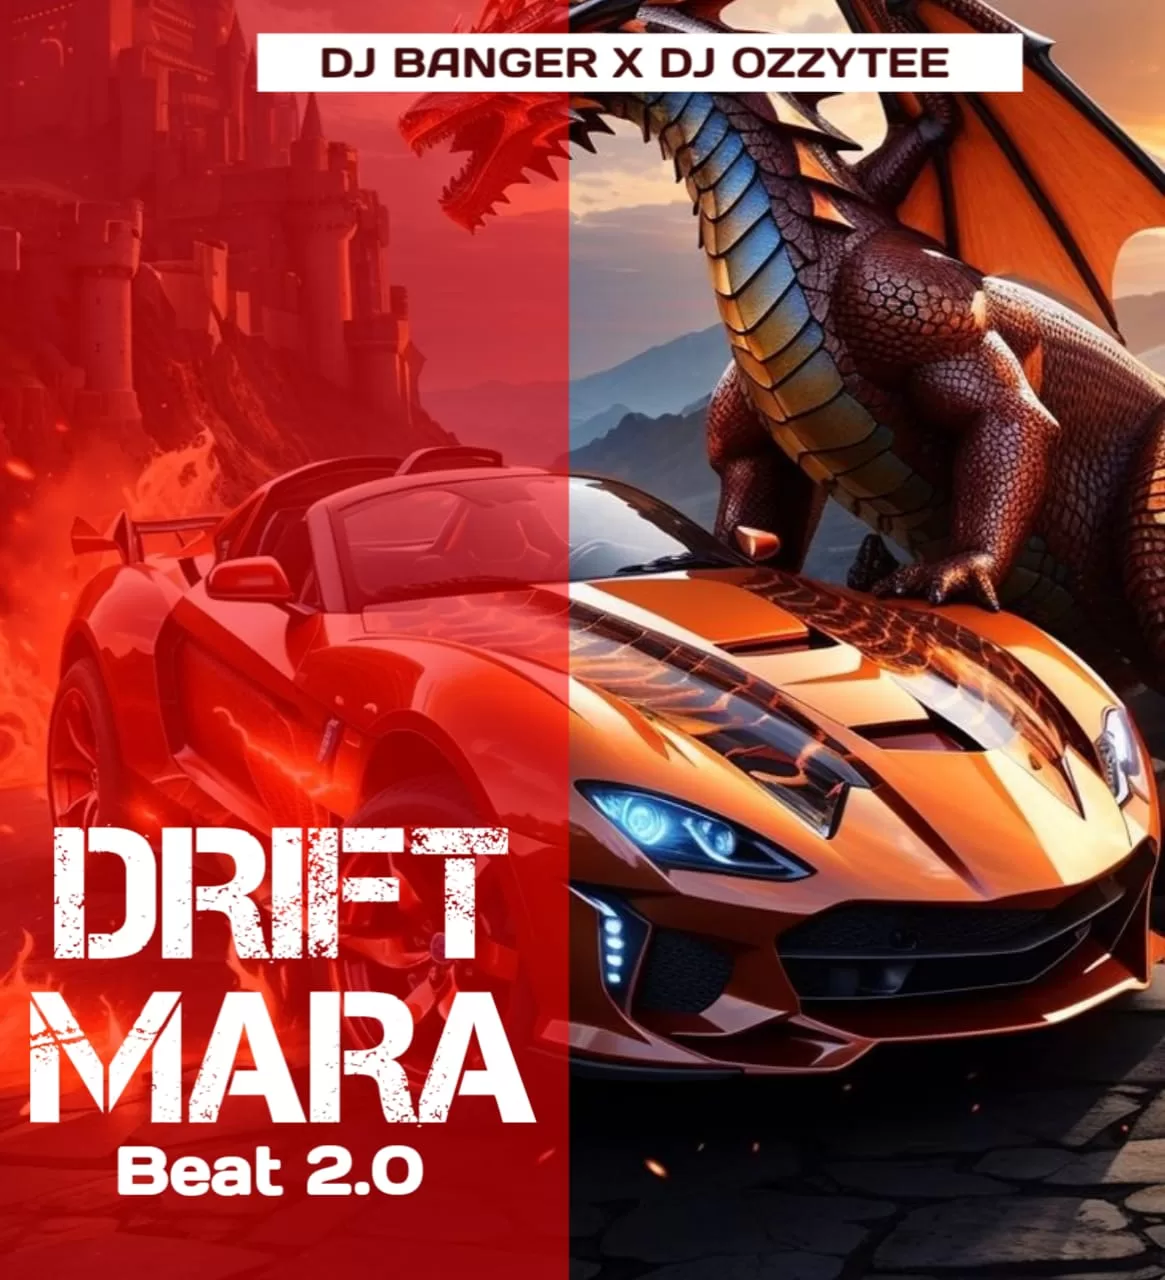 [Freebeat] Dj Banger - Drift Mara Beat 2.0 Ft. Dj Ozzytee Official Download Mp3